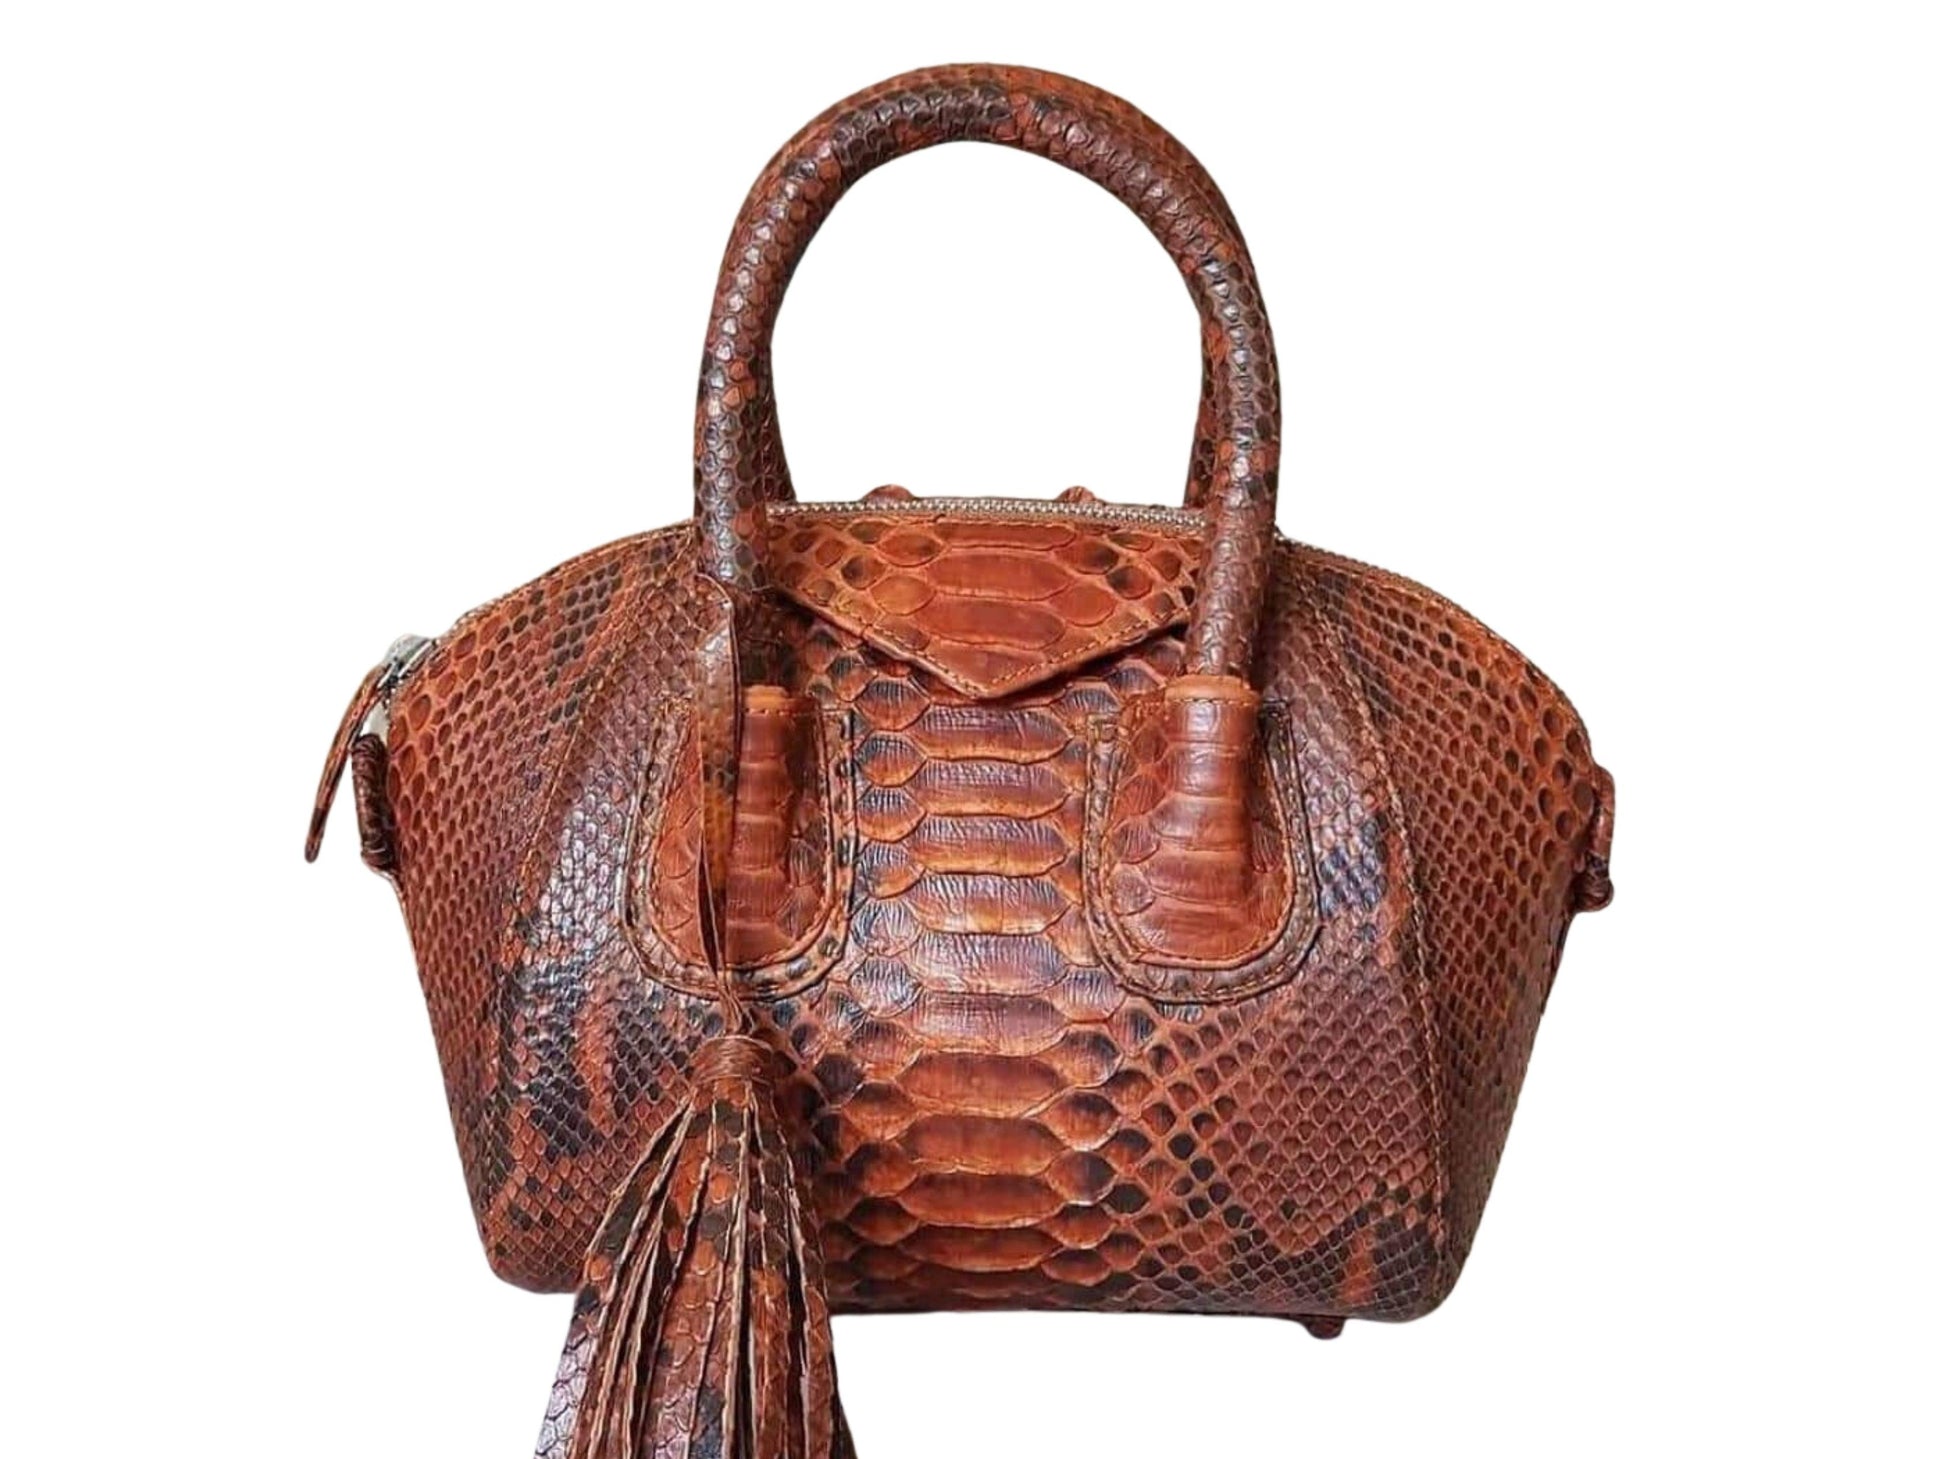 Gavinci Genuine Python Snakeskin Leather Bag for Women Brown Python Jacket by LFM Fashion